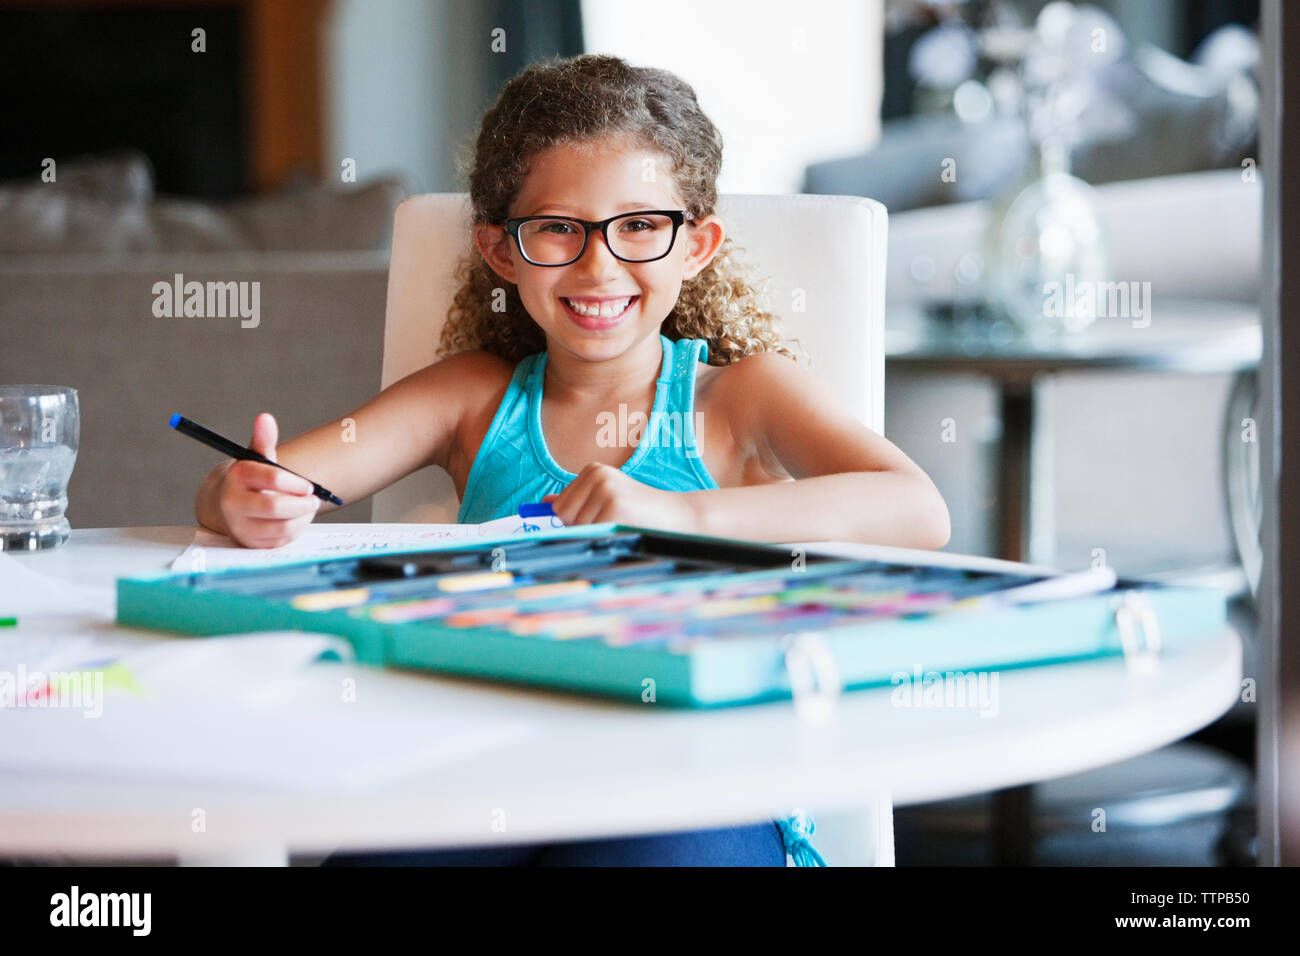 Portrait of happy girl holding felt tip pen at table Stock Photo